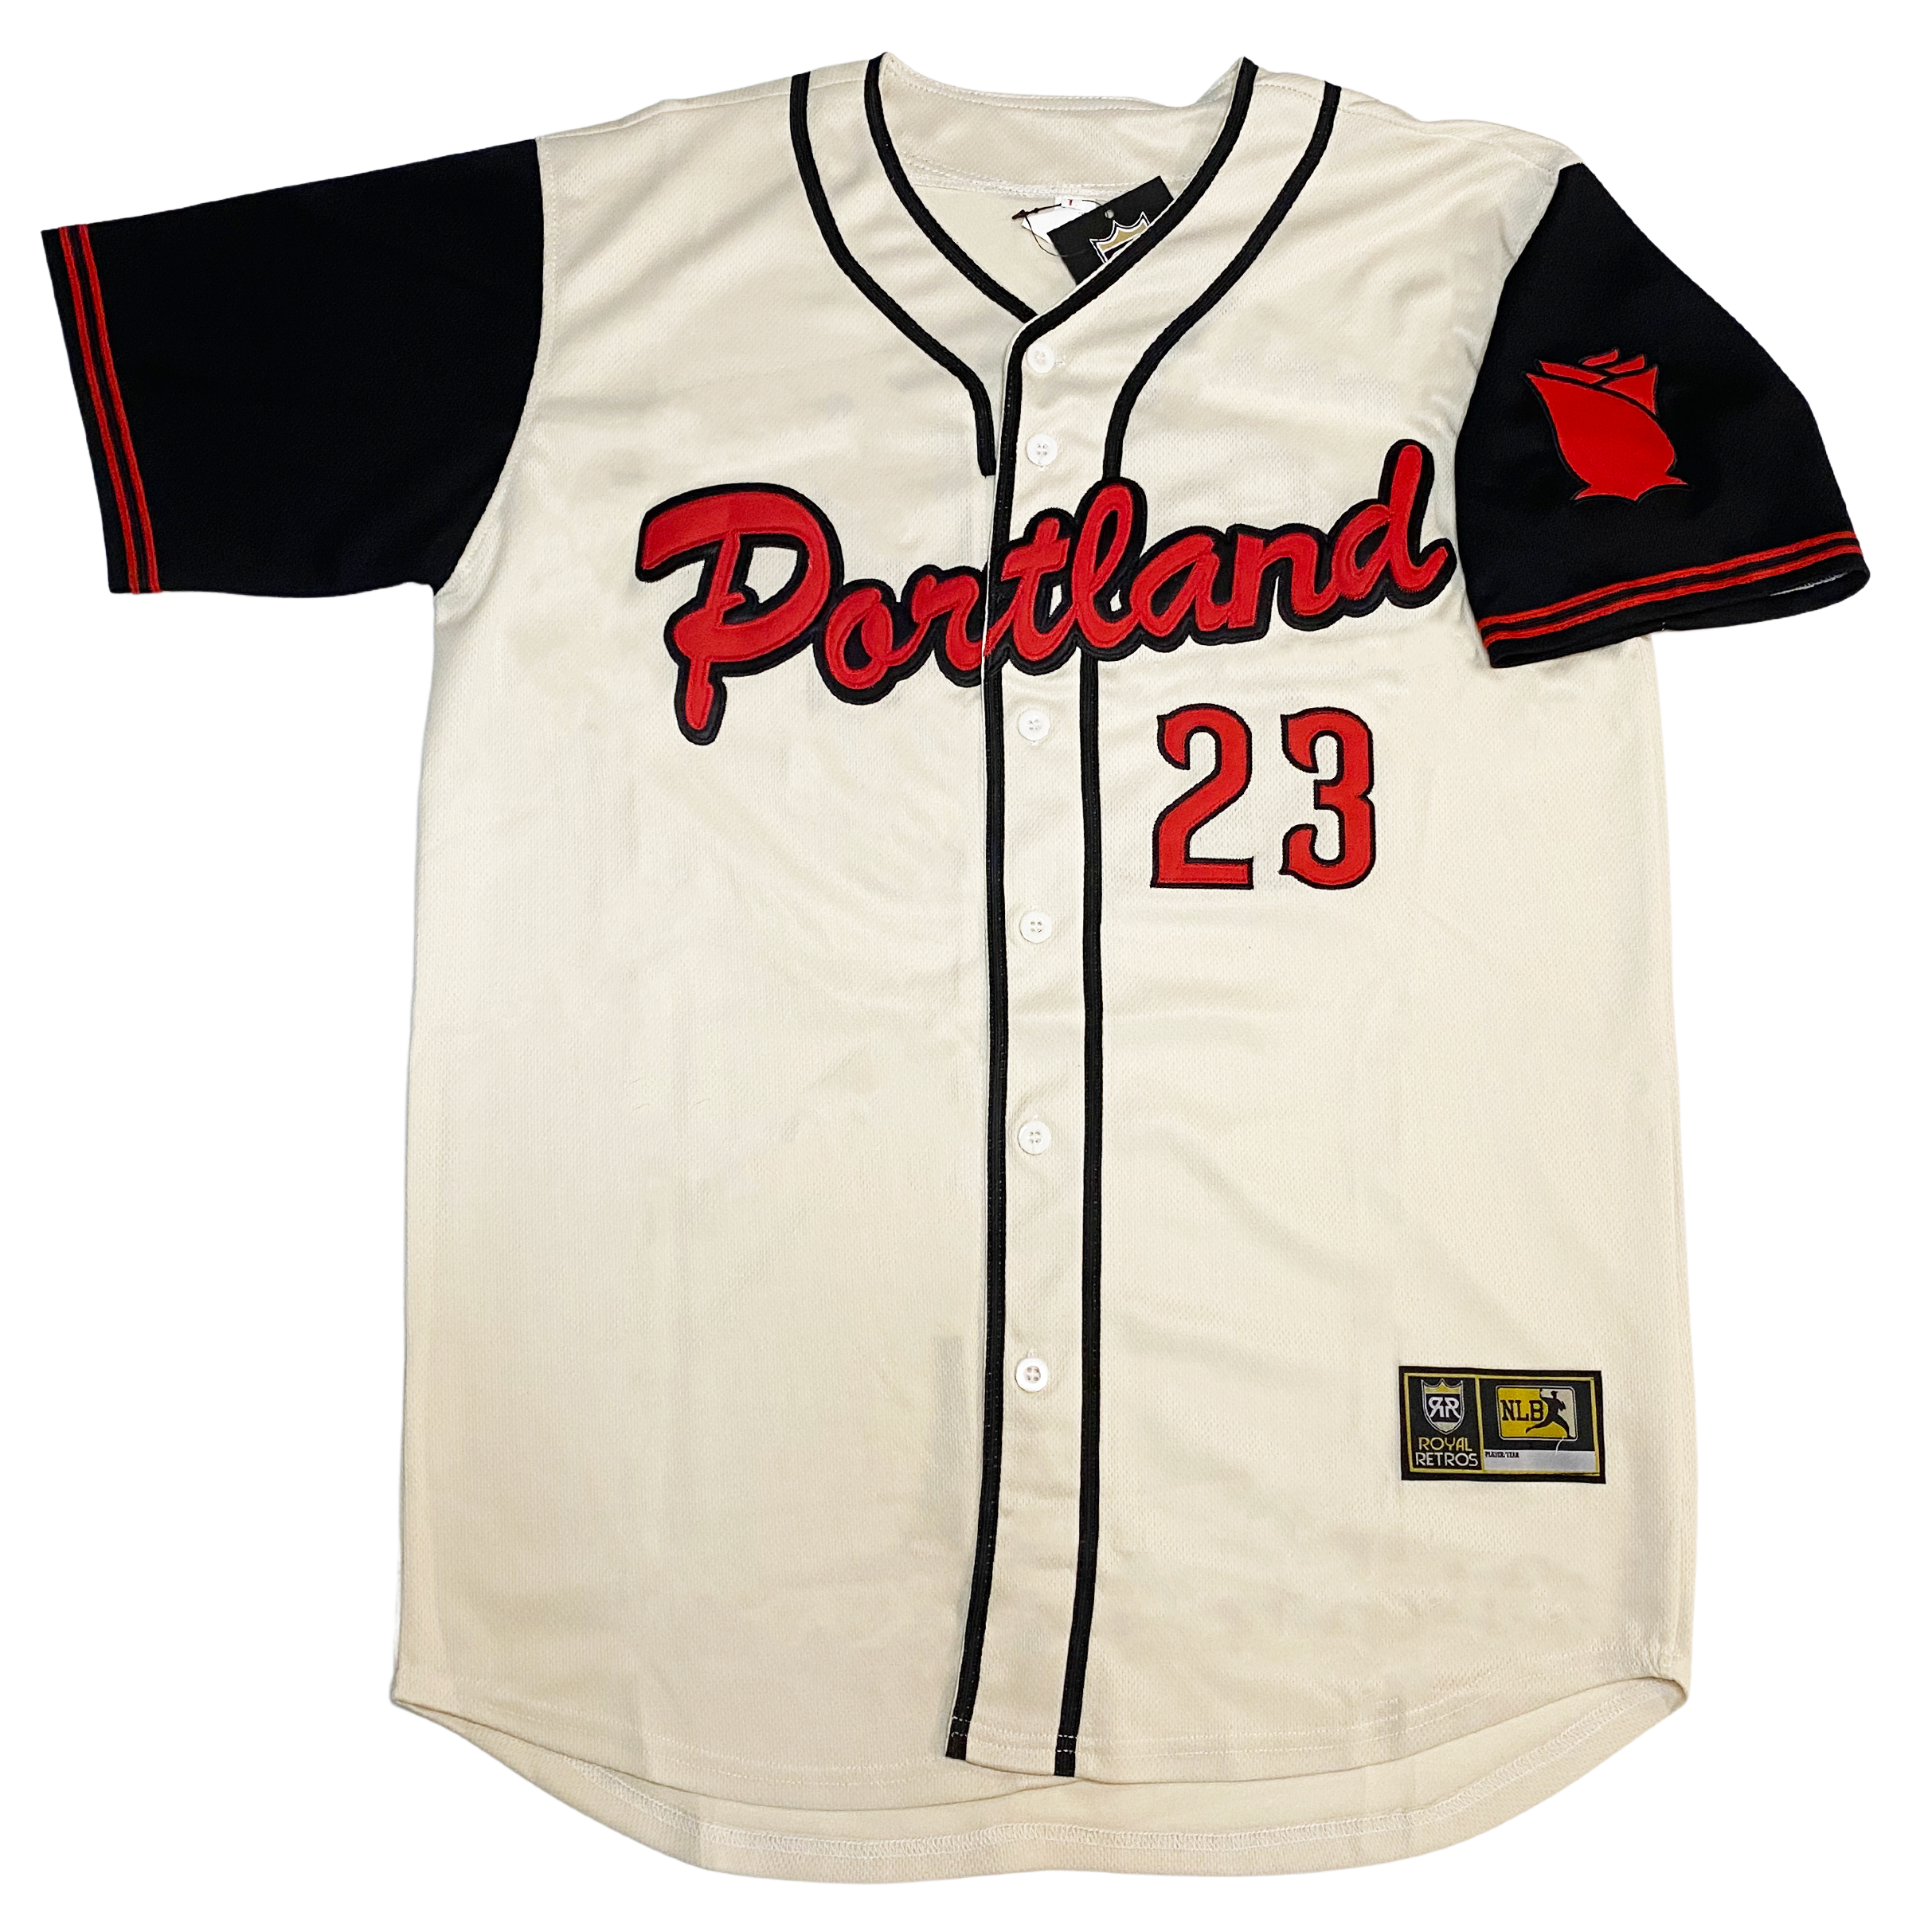 Portland Mavericks Jersey - Red - 5XL - Royal Retros